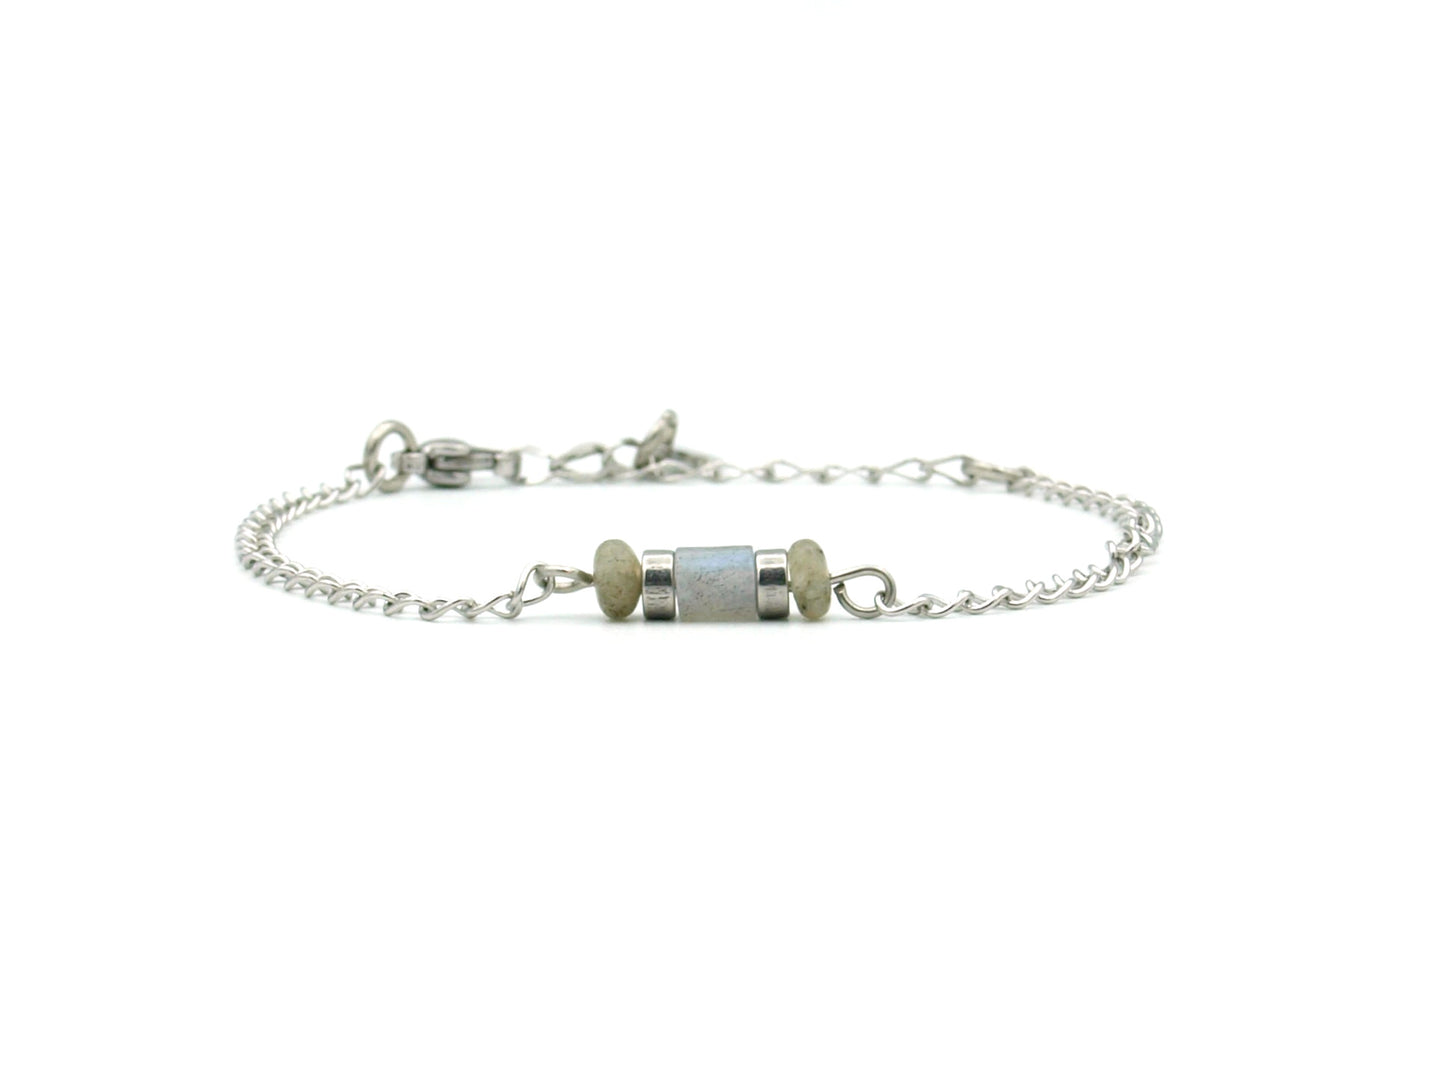 Bracelet Iris labradorite, silver and gold stainless steel